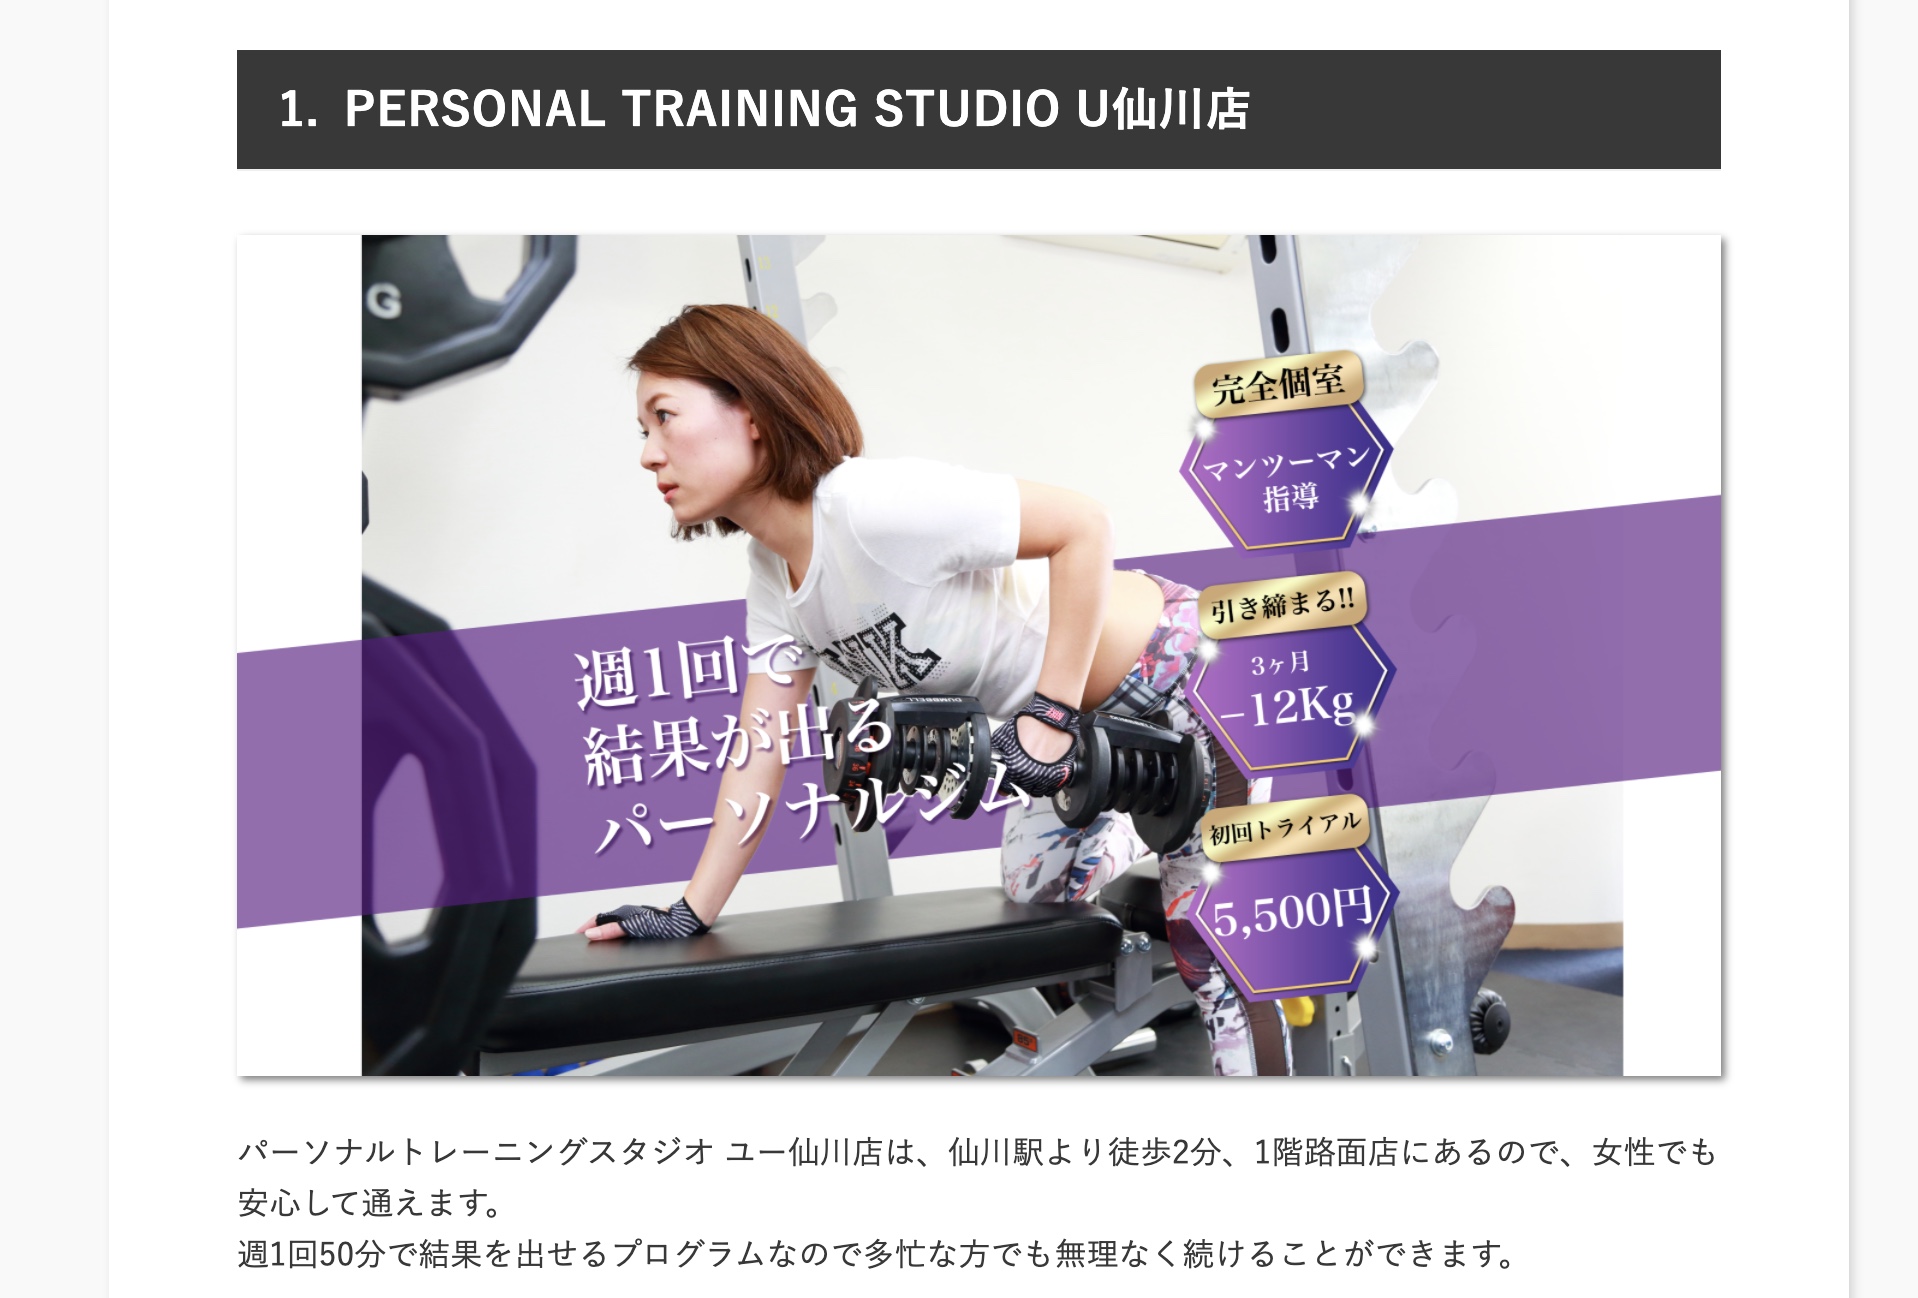 PERSONAL TRAINING STUDIO U仙川店がフィットネスメディアIDEL様に掲載されました